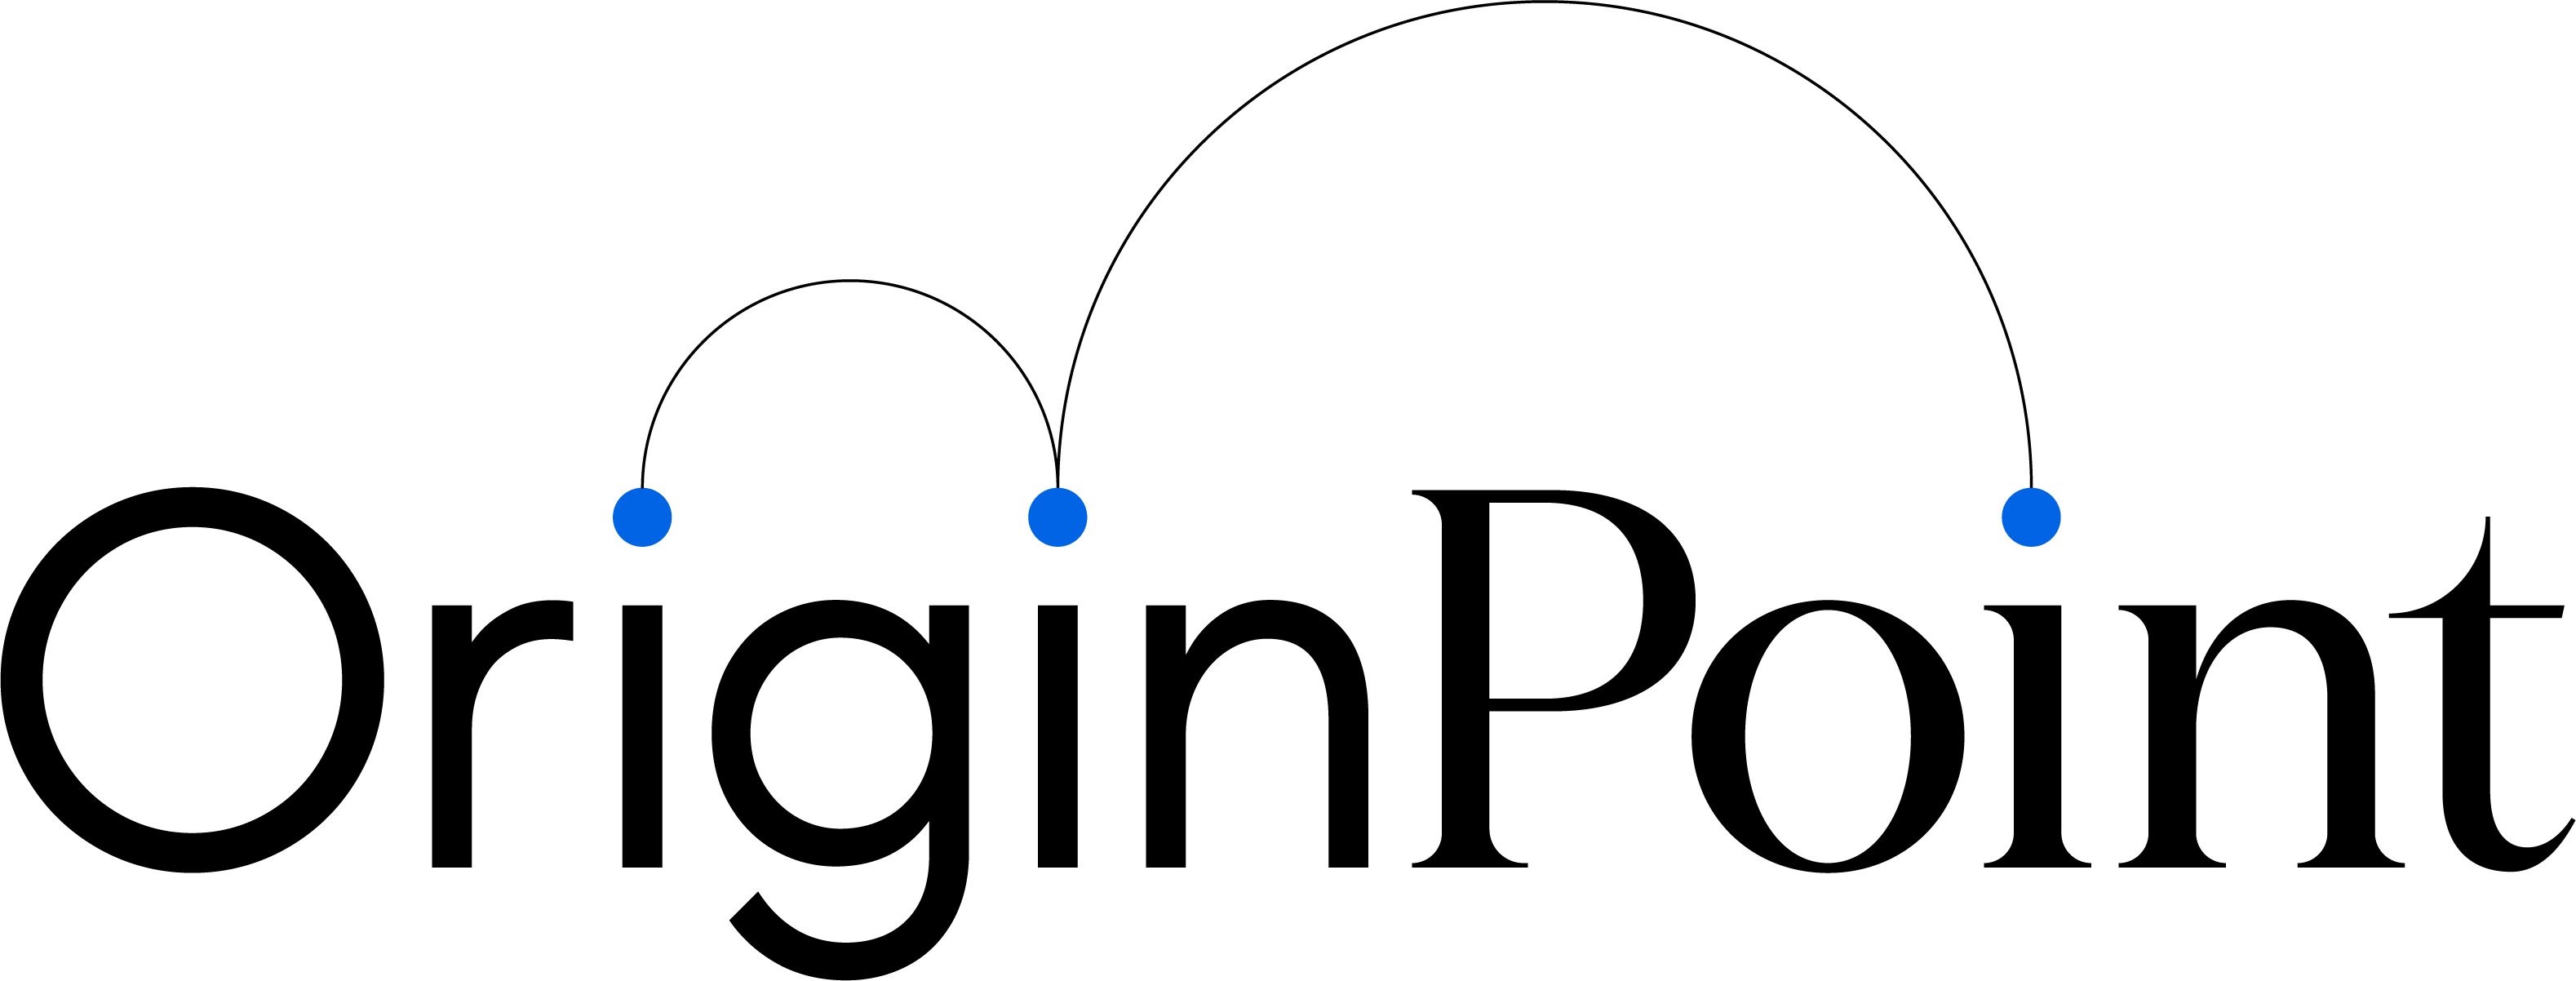 Origin Point logo